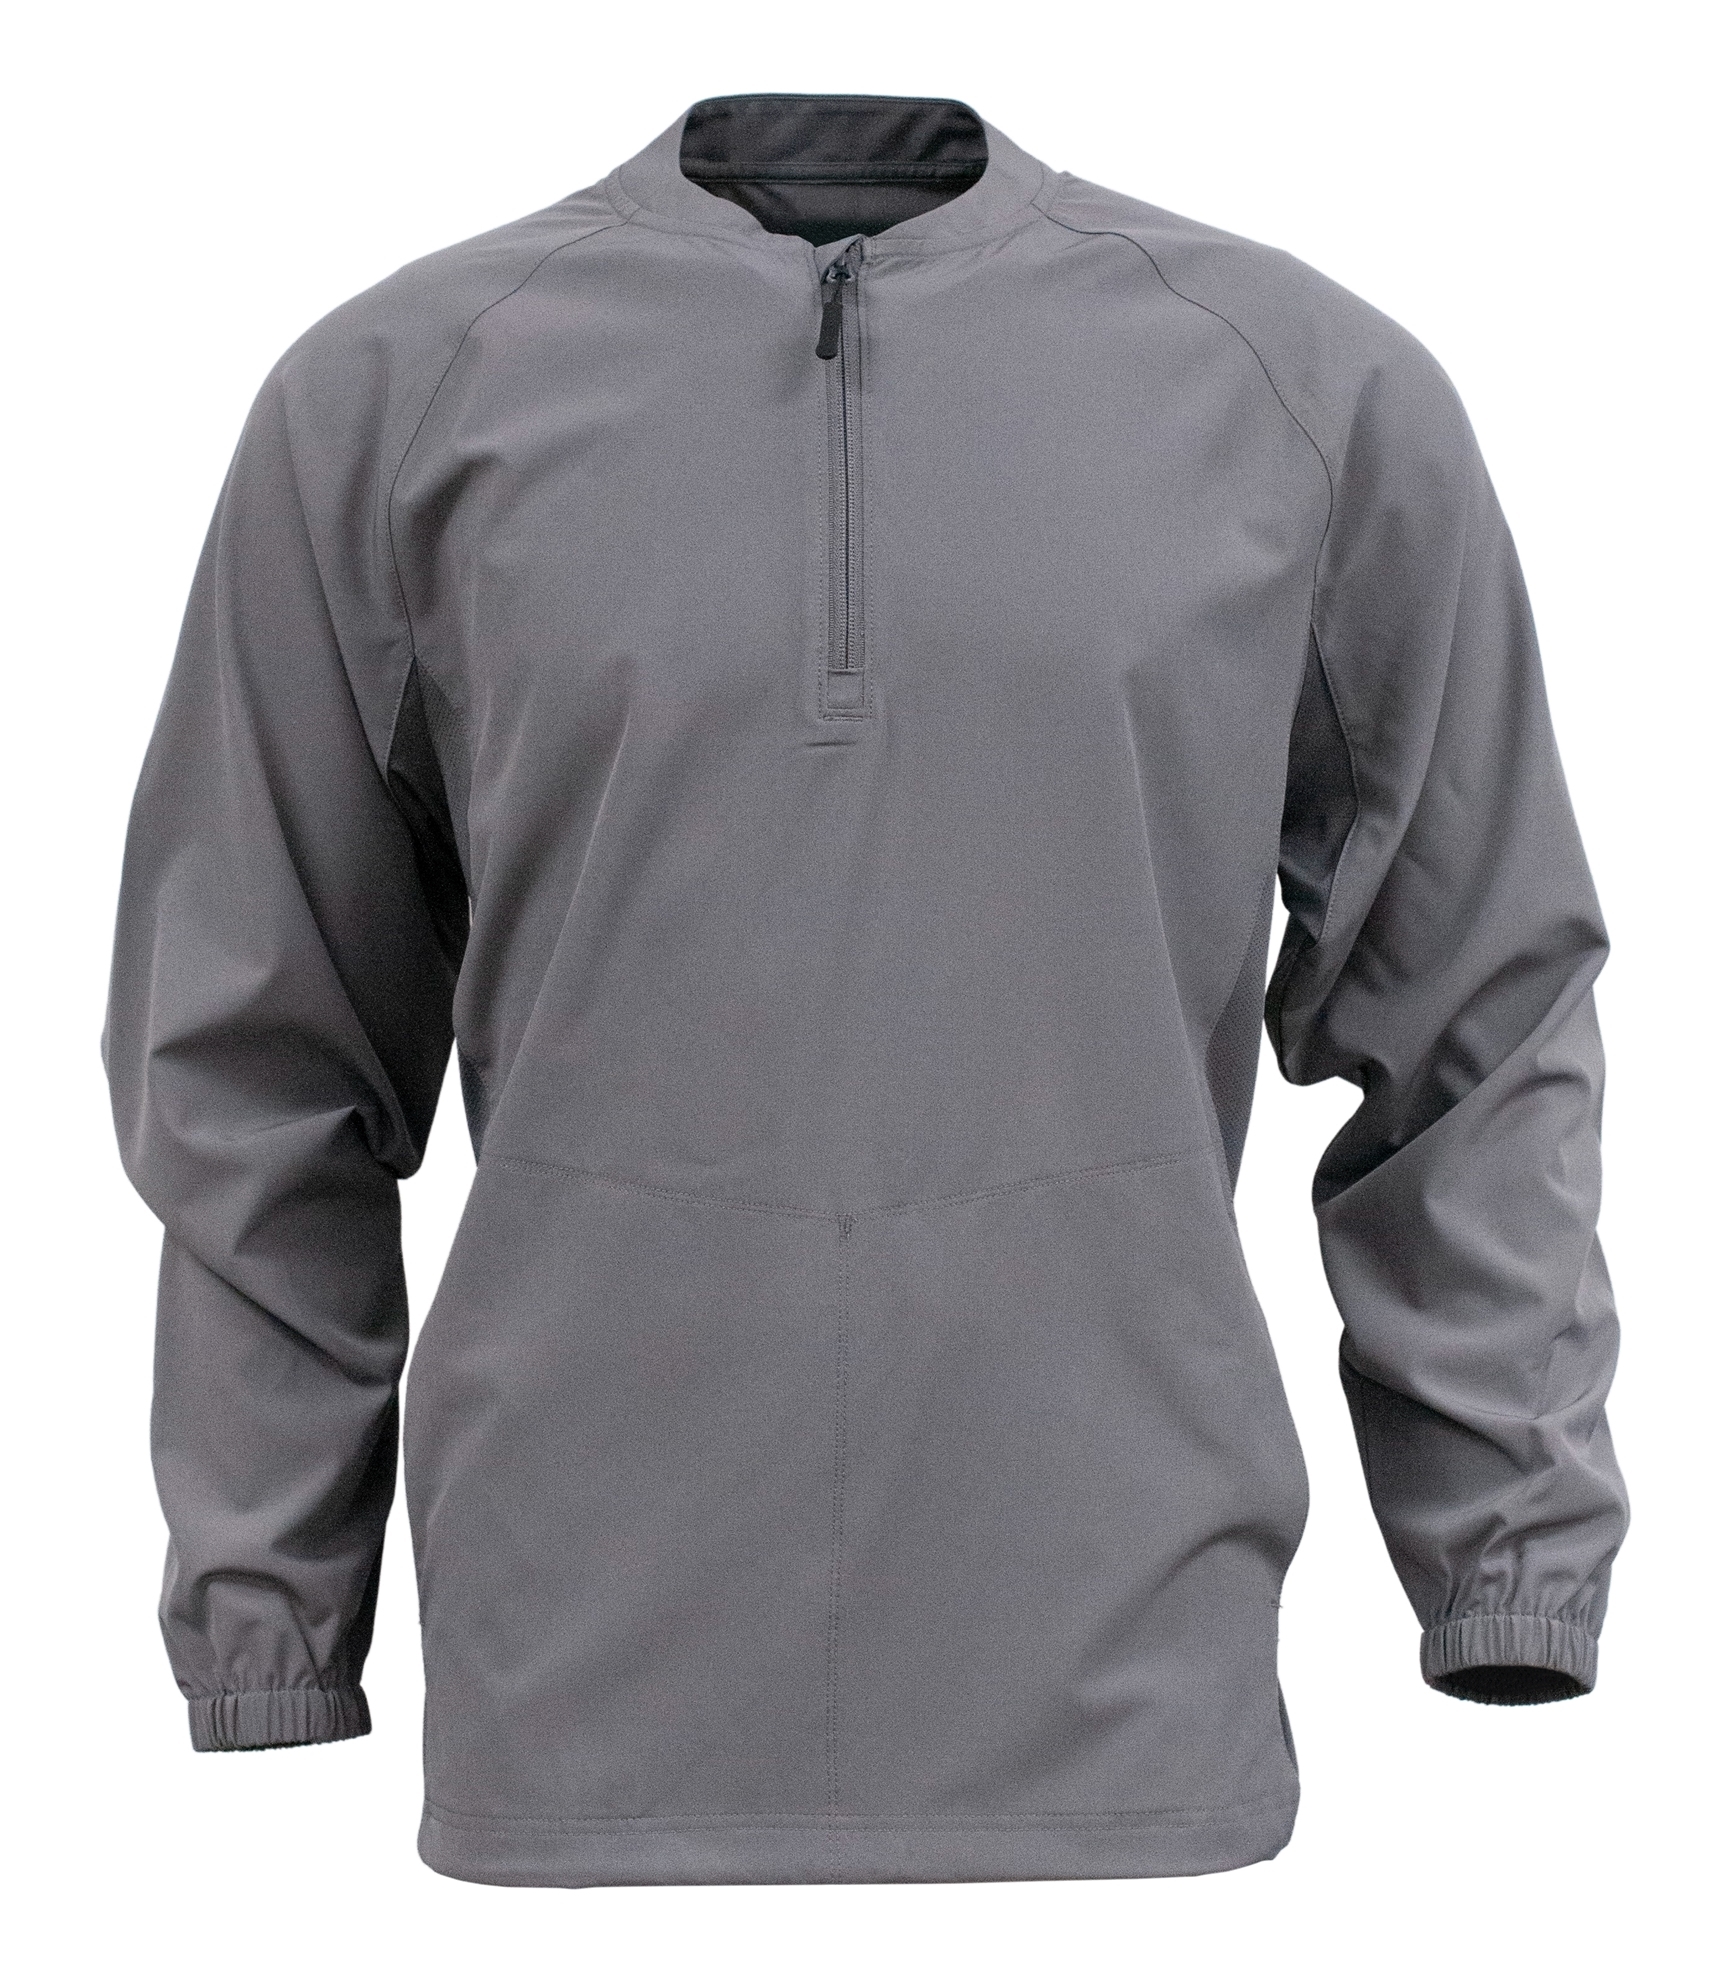 BAW Athletic Wear CJ138 - Adult Long Sleeve Overshirt